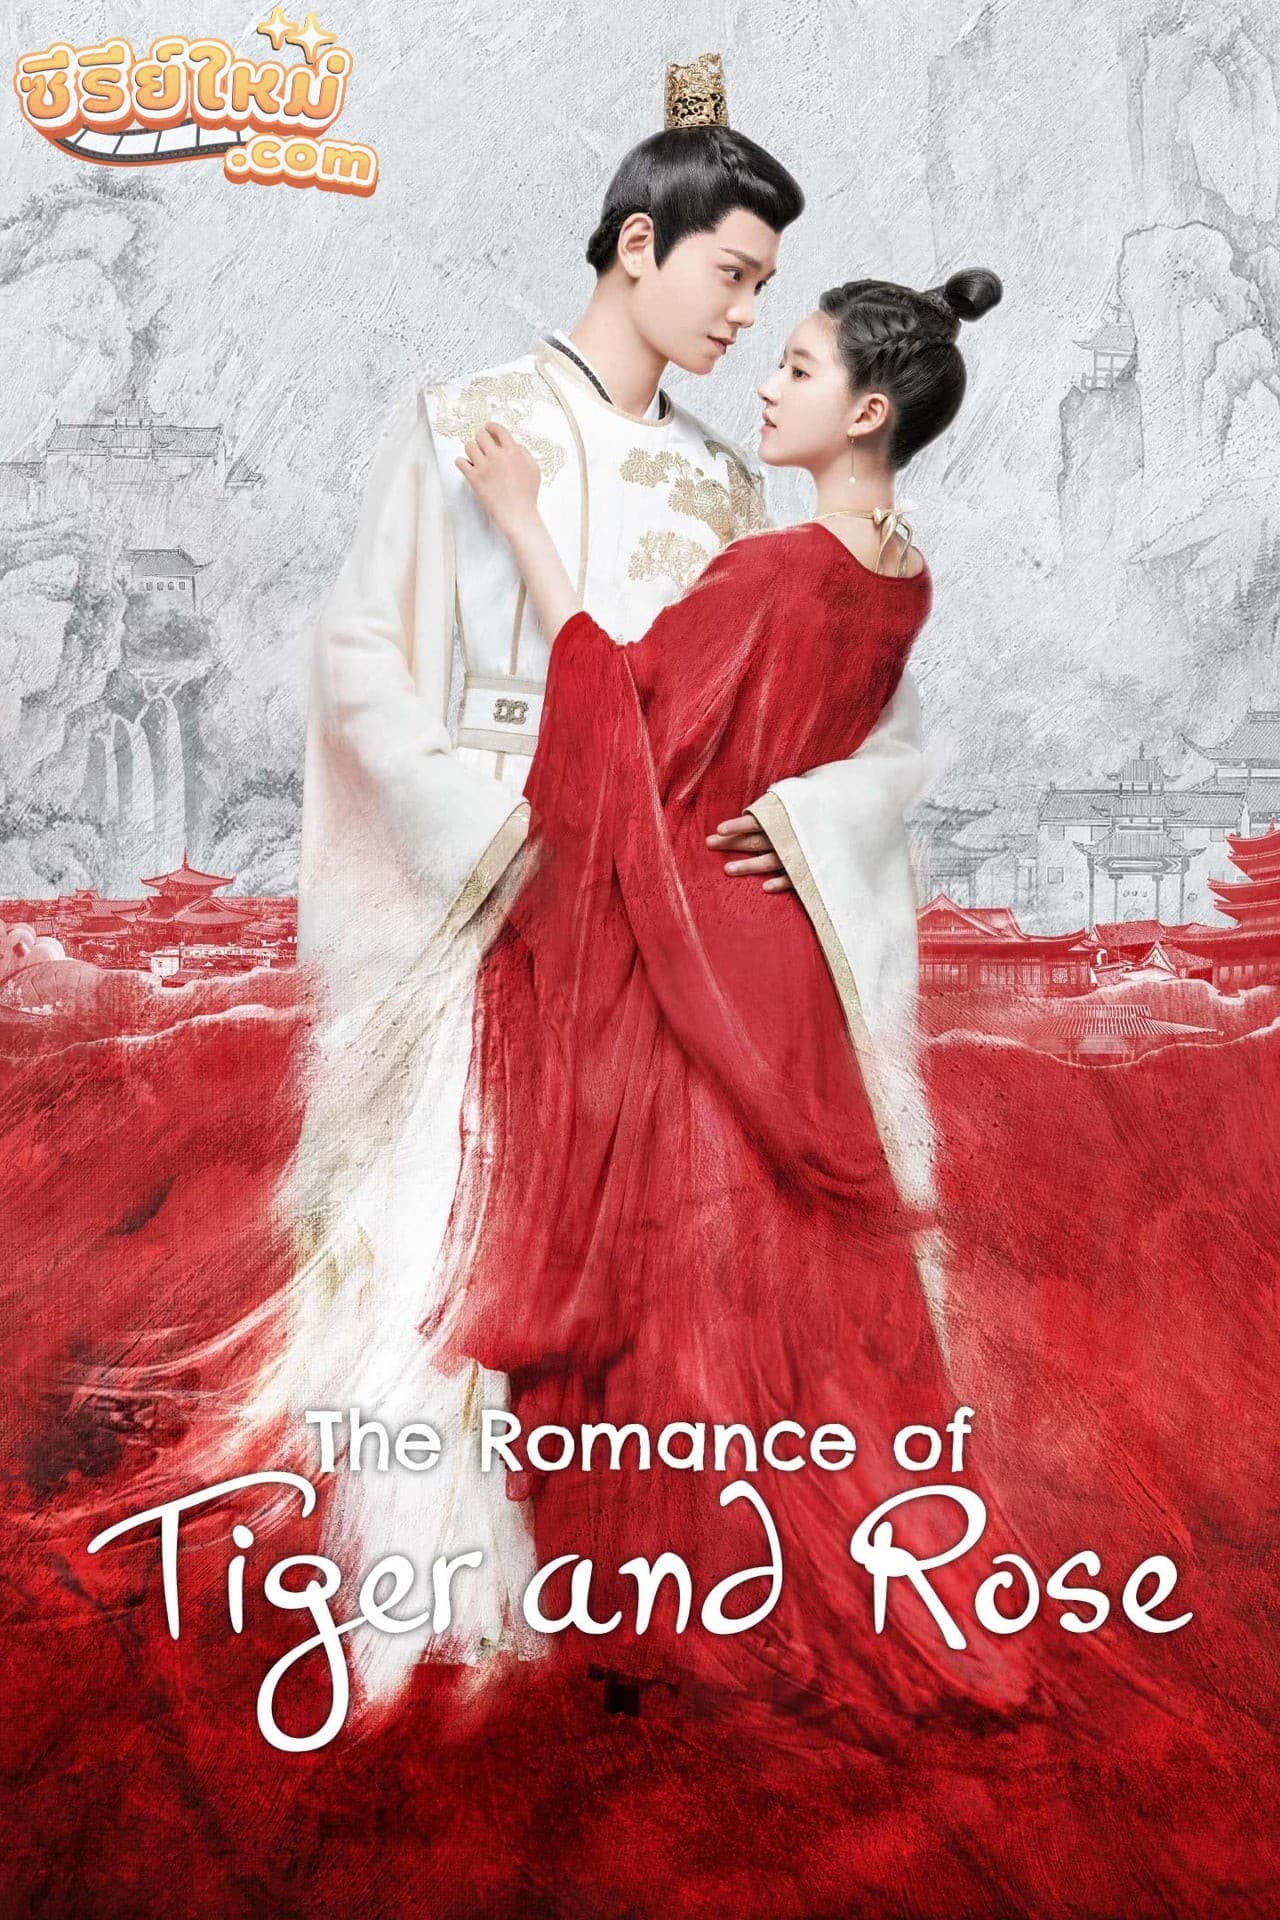 The Romance of Tiger and Rose ข้านี่เเหละองค์หญิงสาม (2020)